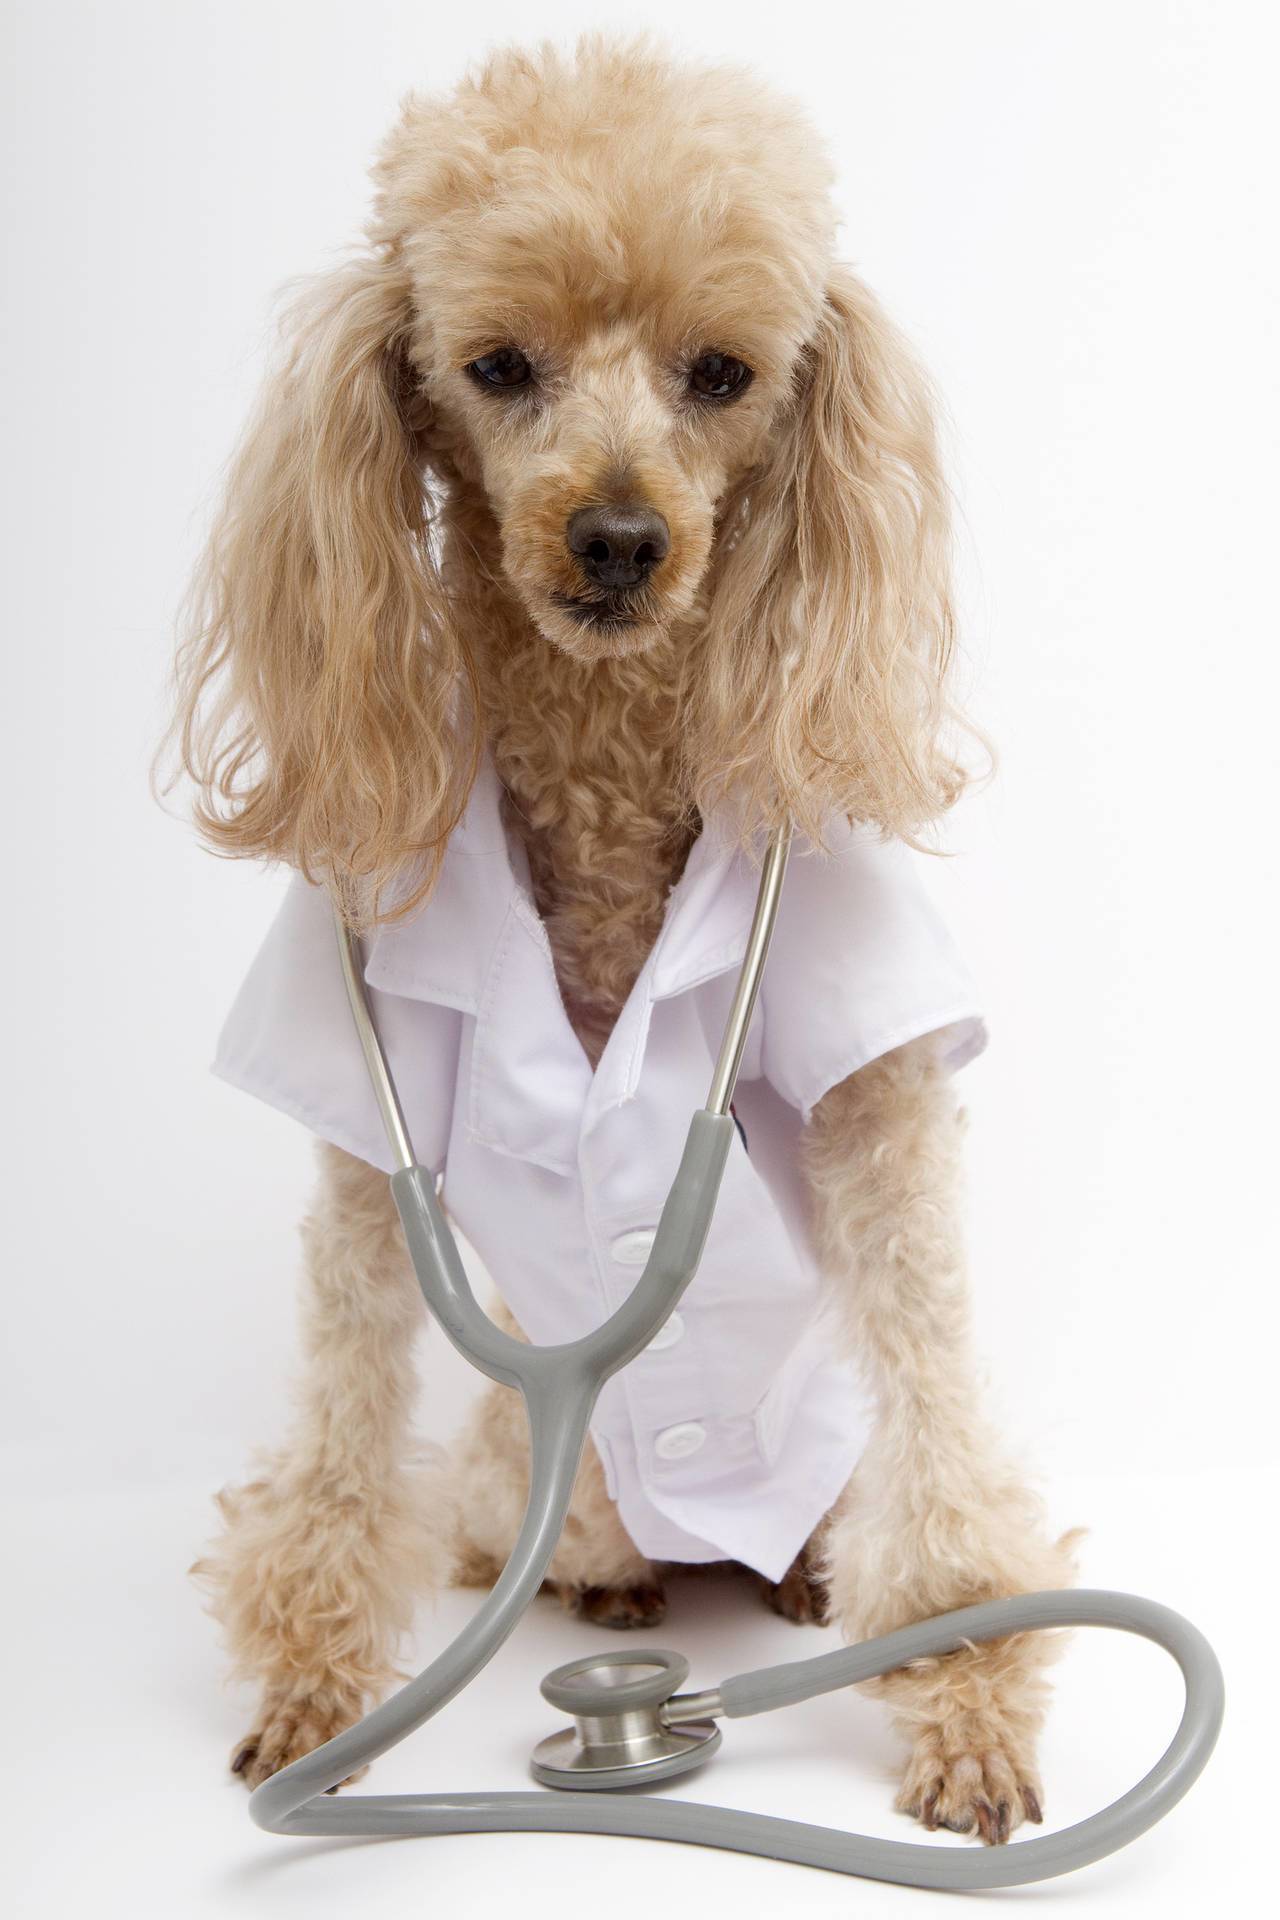 dogs-prevent-human-illnesses-vet-organics